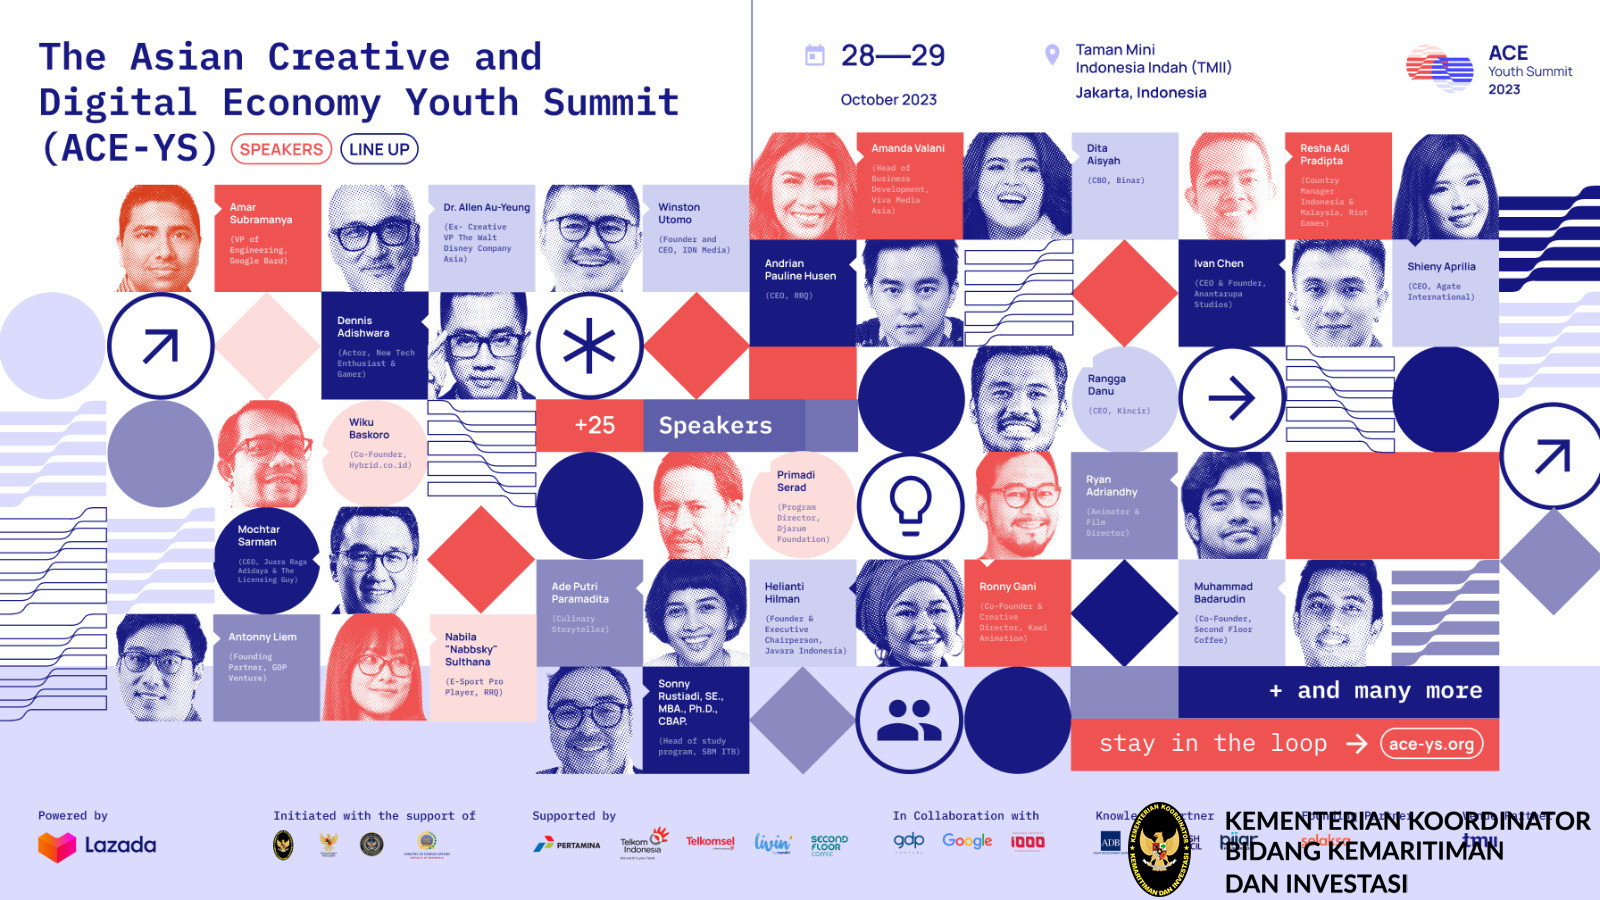 Jelang Digelar 28-29 Oktober, The Asian Creative and Digital Economy Youth Summit Umumkan Deretan Pengisi Acara